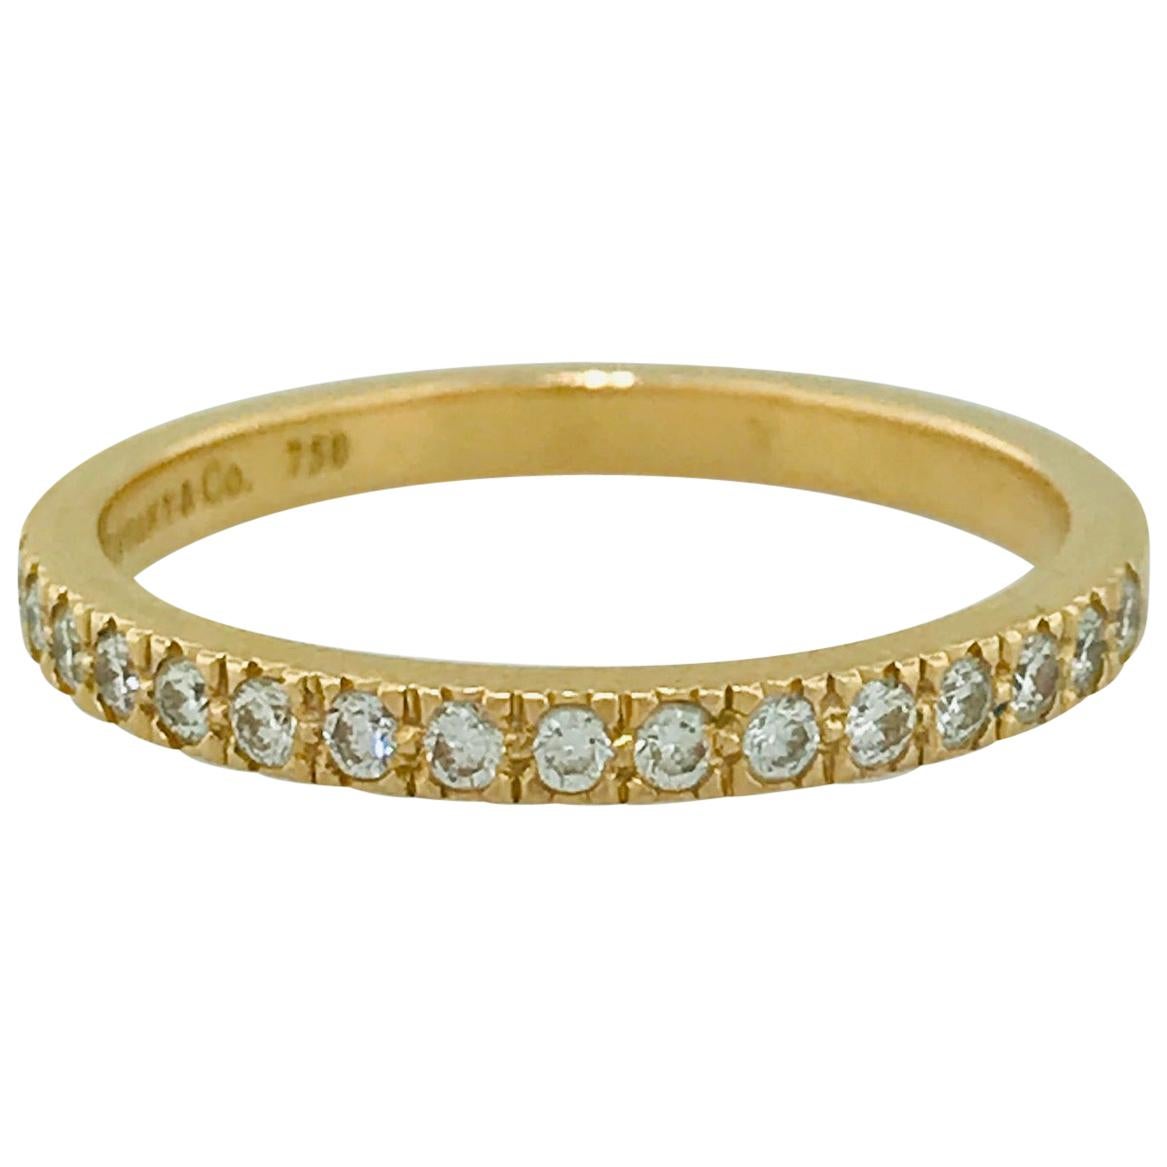 Tiffany Wedding Band 18k Rose Gold Tiffany & Co. Ring, .30 carat diamond weight